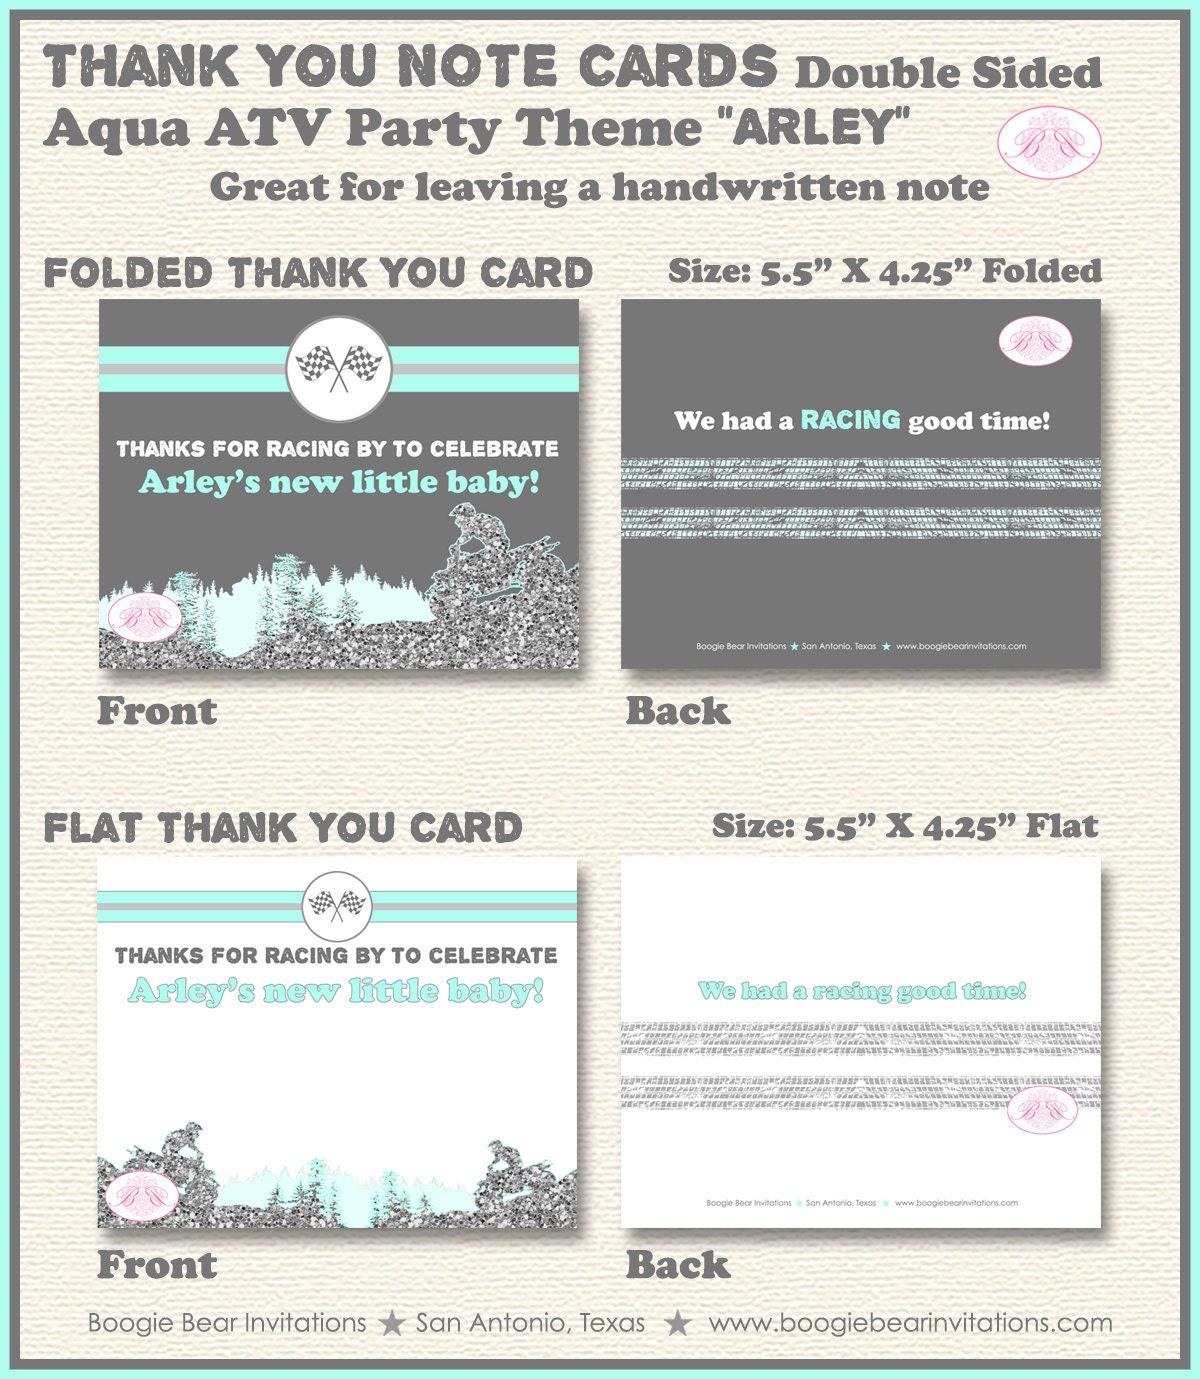 Aqua ATV Baby Shower Party Thank You Card Girl Boy Glitter Green Blue Grey Gray 4 Wheeler Quad Boogie Bear Invitations Arley Theme Printed